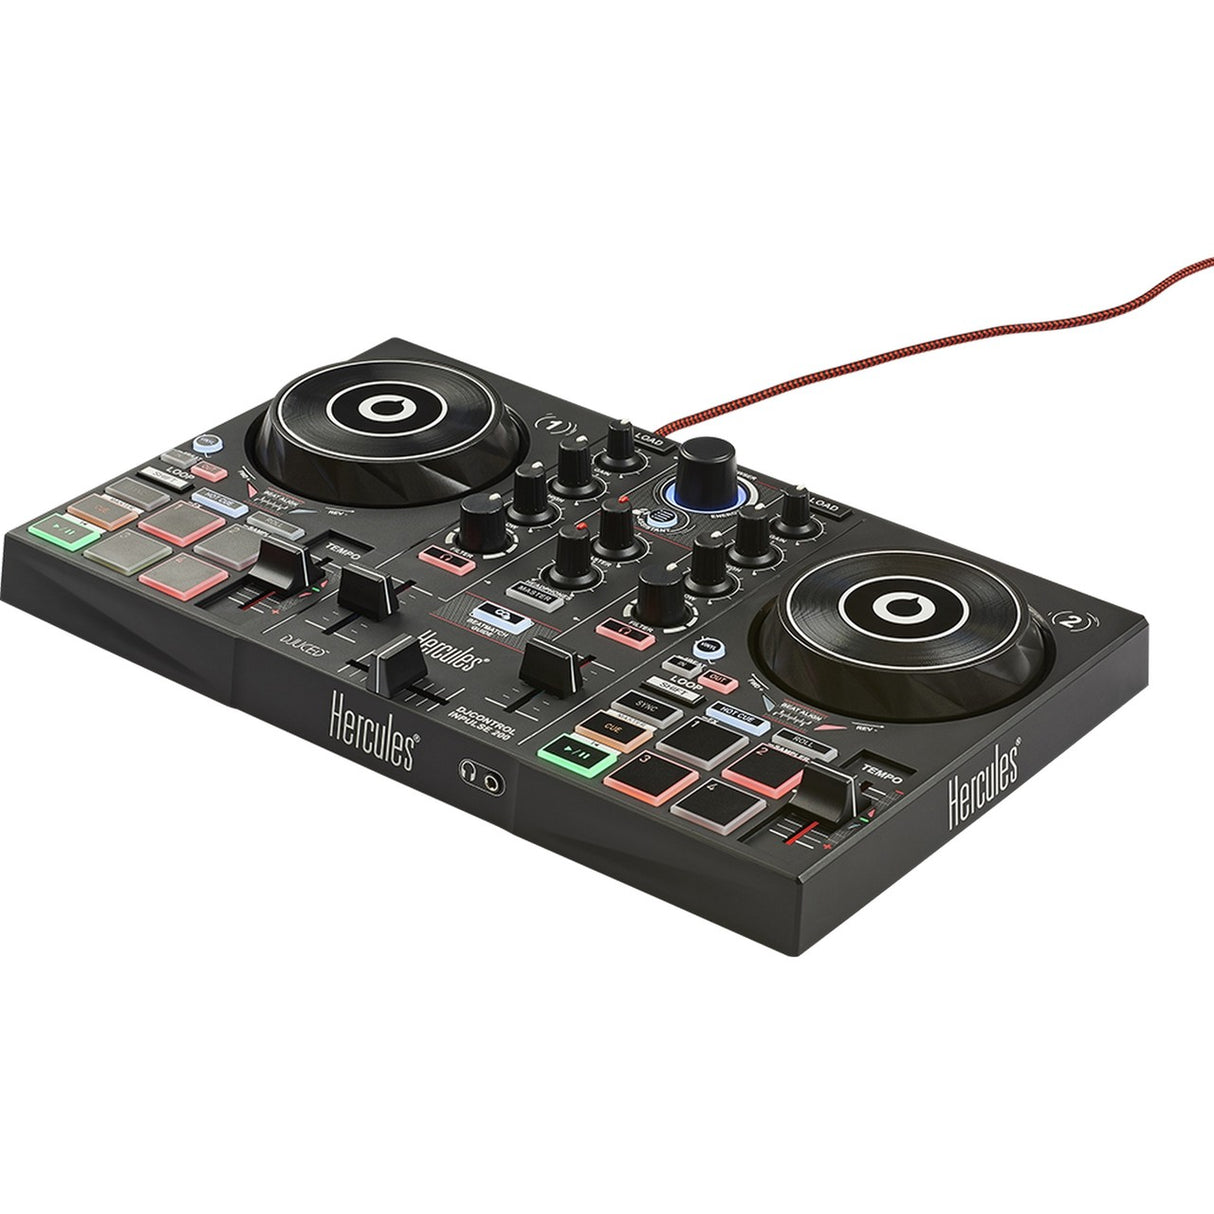 Hercules DJControl Inpulse 200 | DJ Controller with Built-in Sound Card